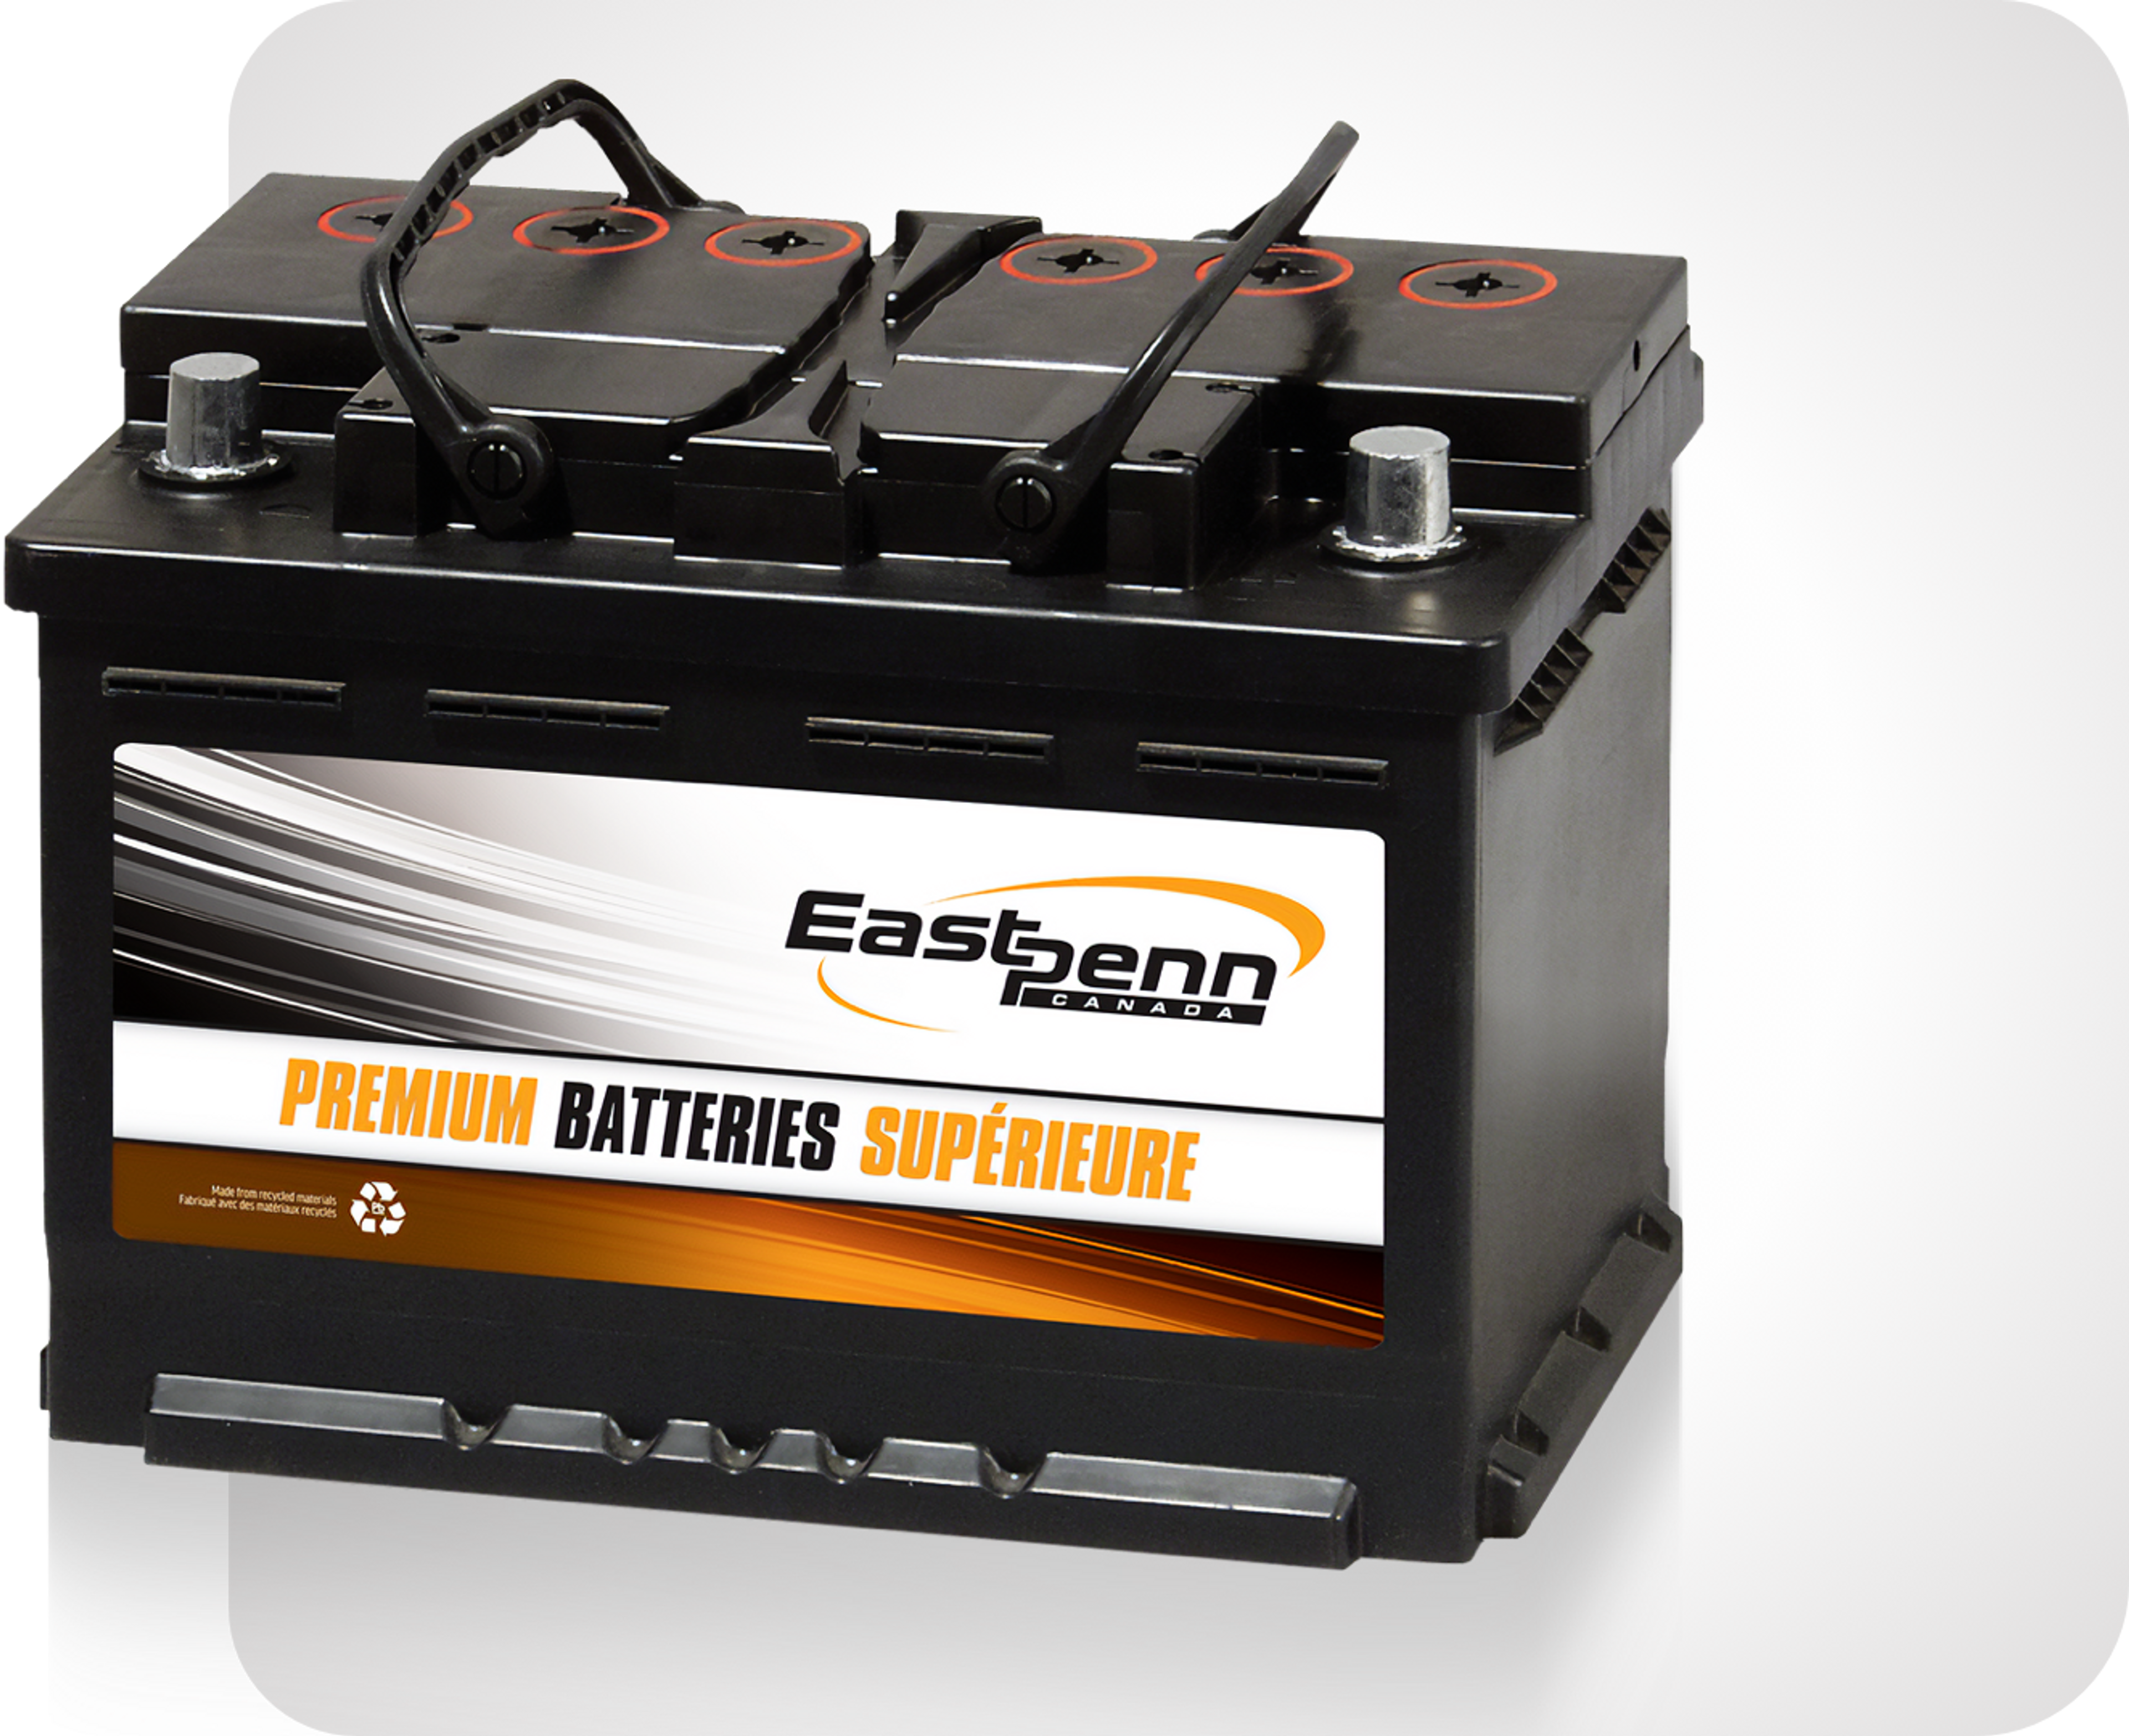 Picture of single East Penn brand premium car starting batteries